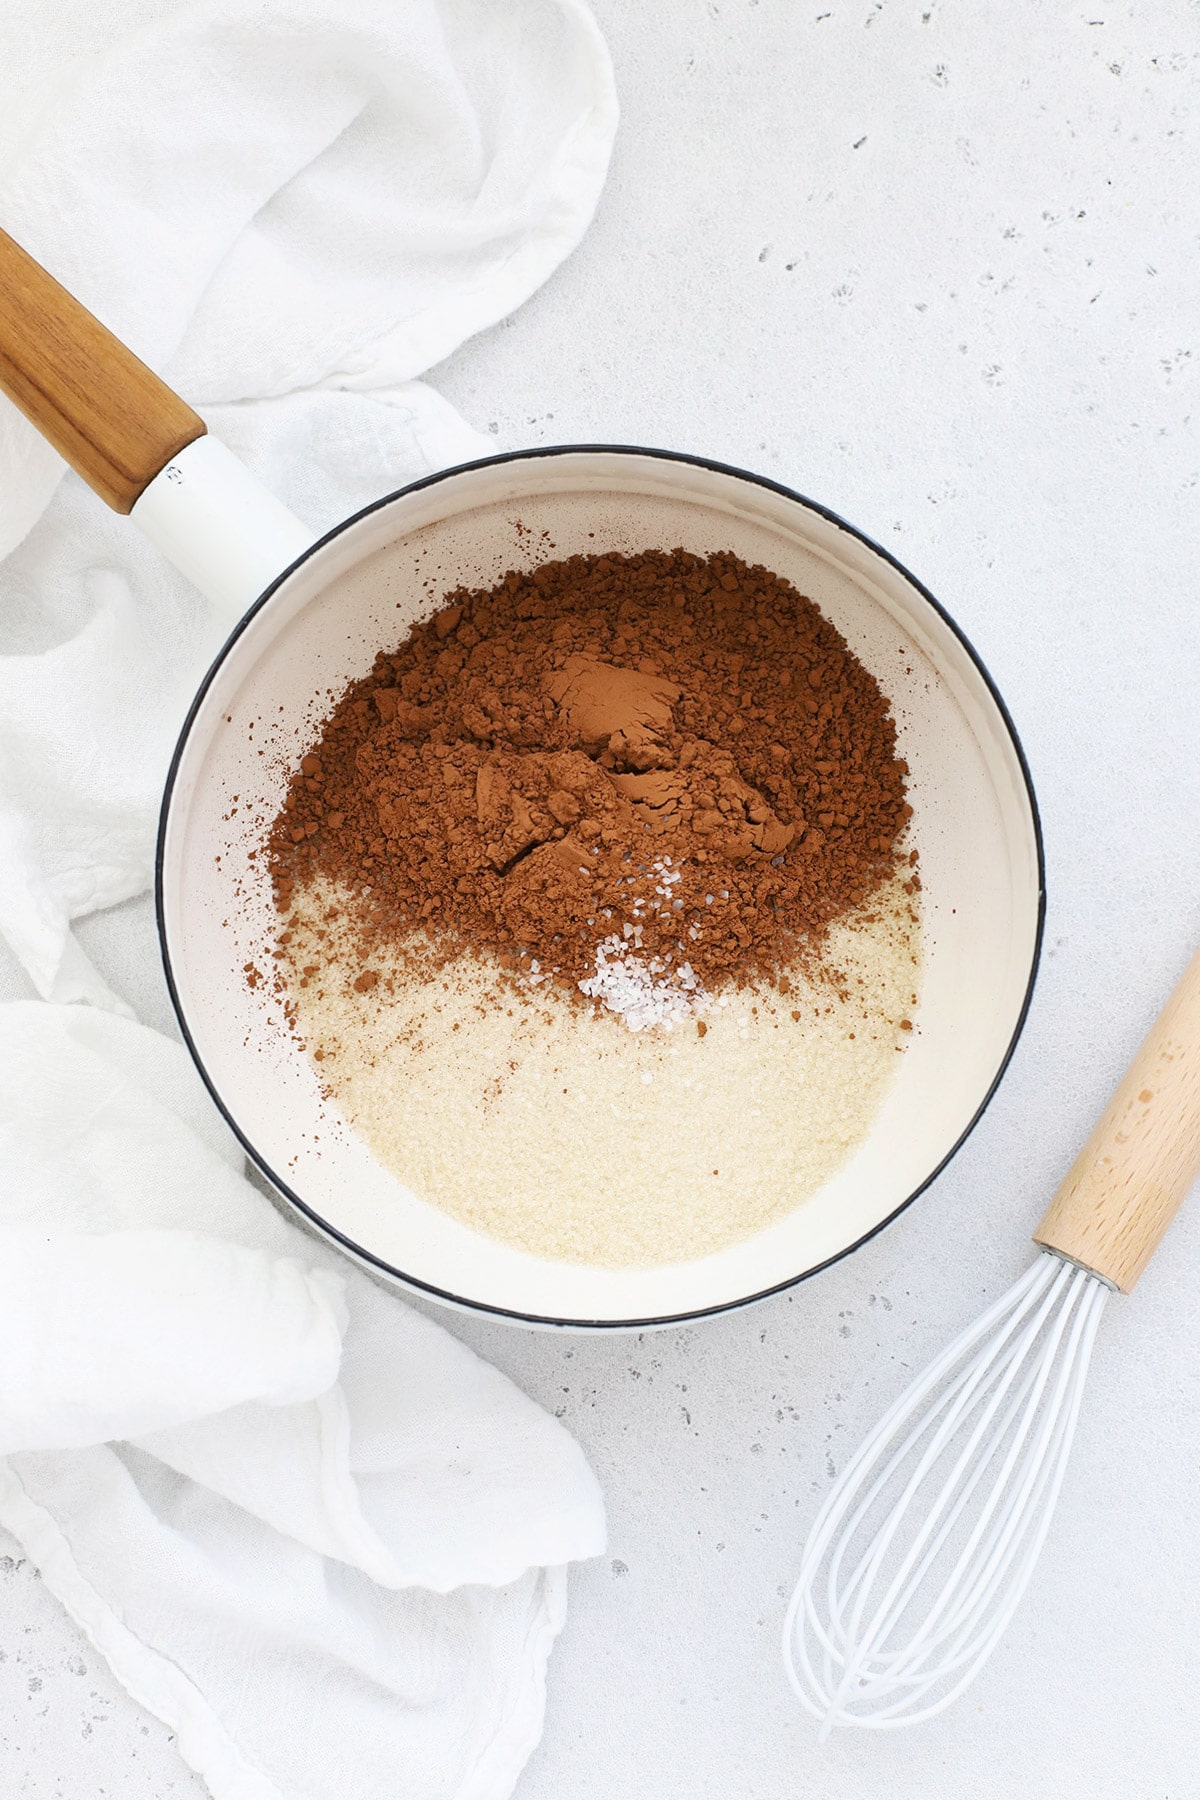 Adding cocoa powder, sugar, and salt to a saucepan to make homemade chocolate syrup